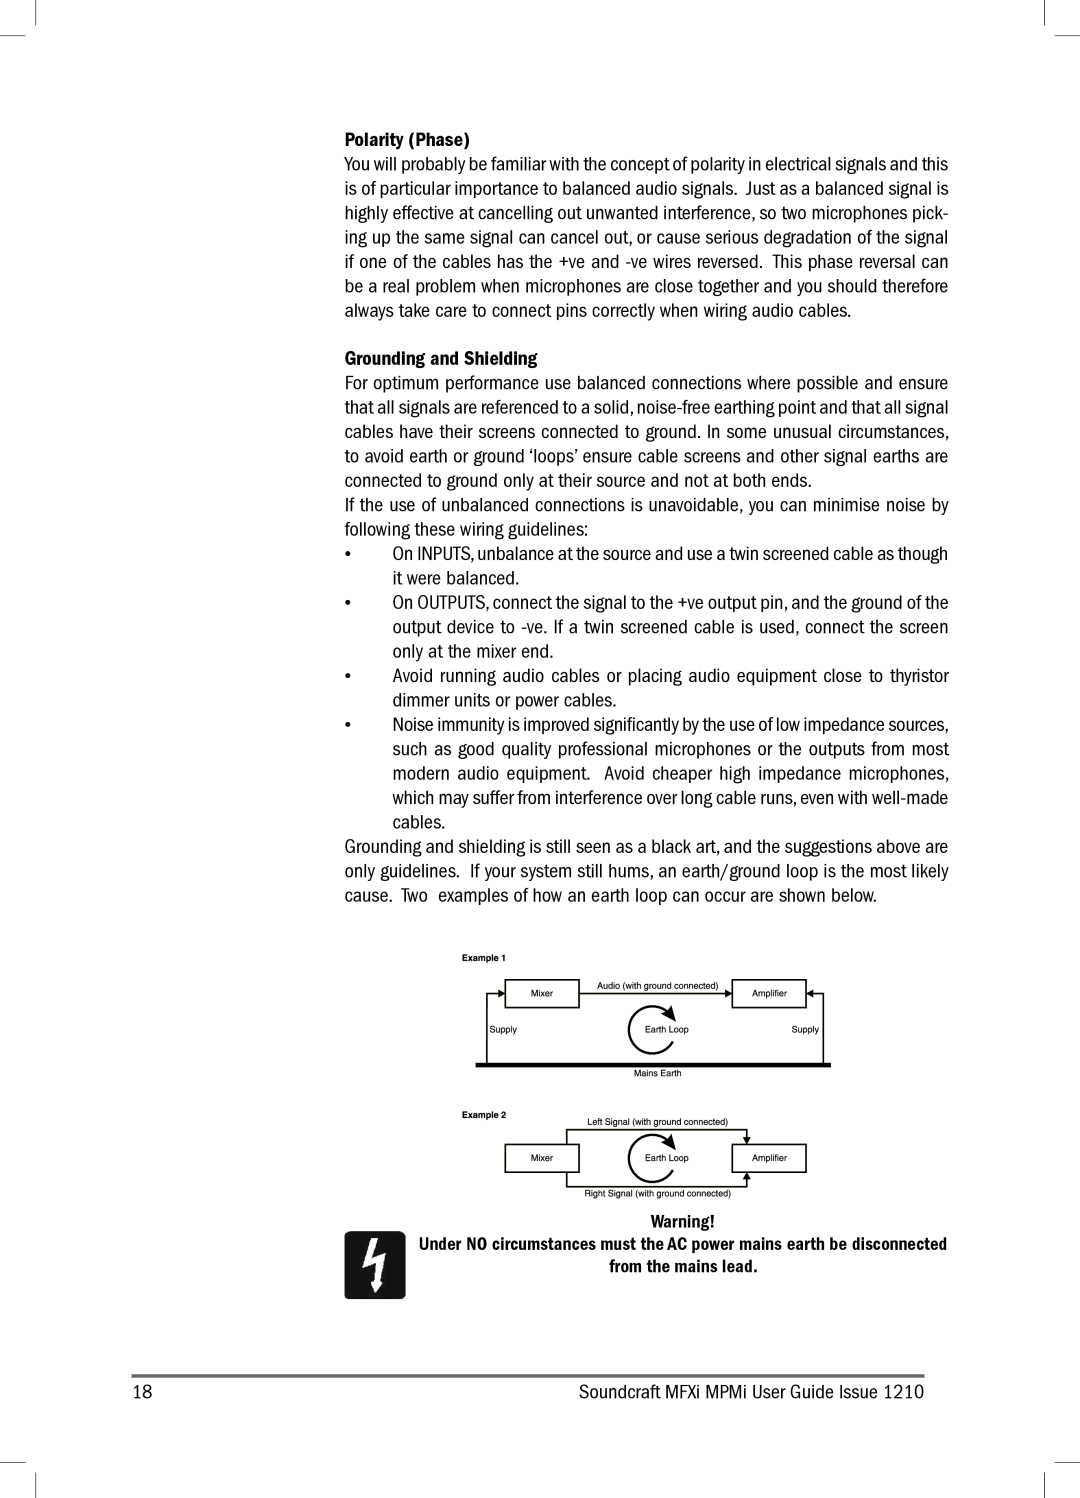 Harman MPMI, MFXI manual Polarity Phase, Grounding and Shielding 